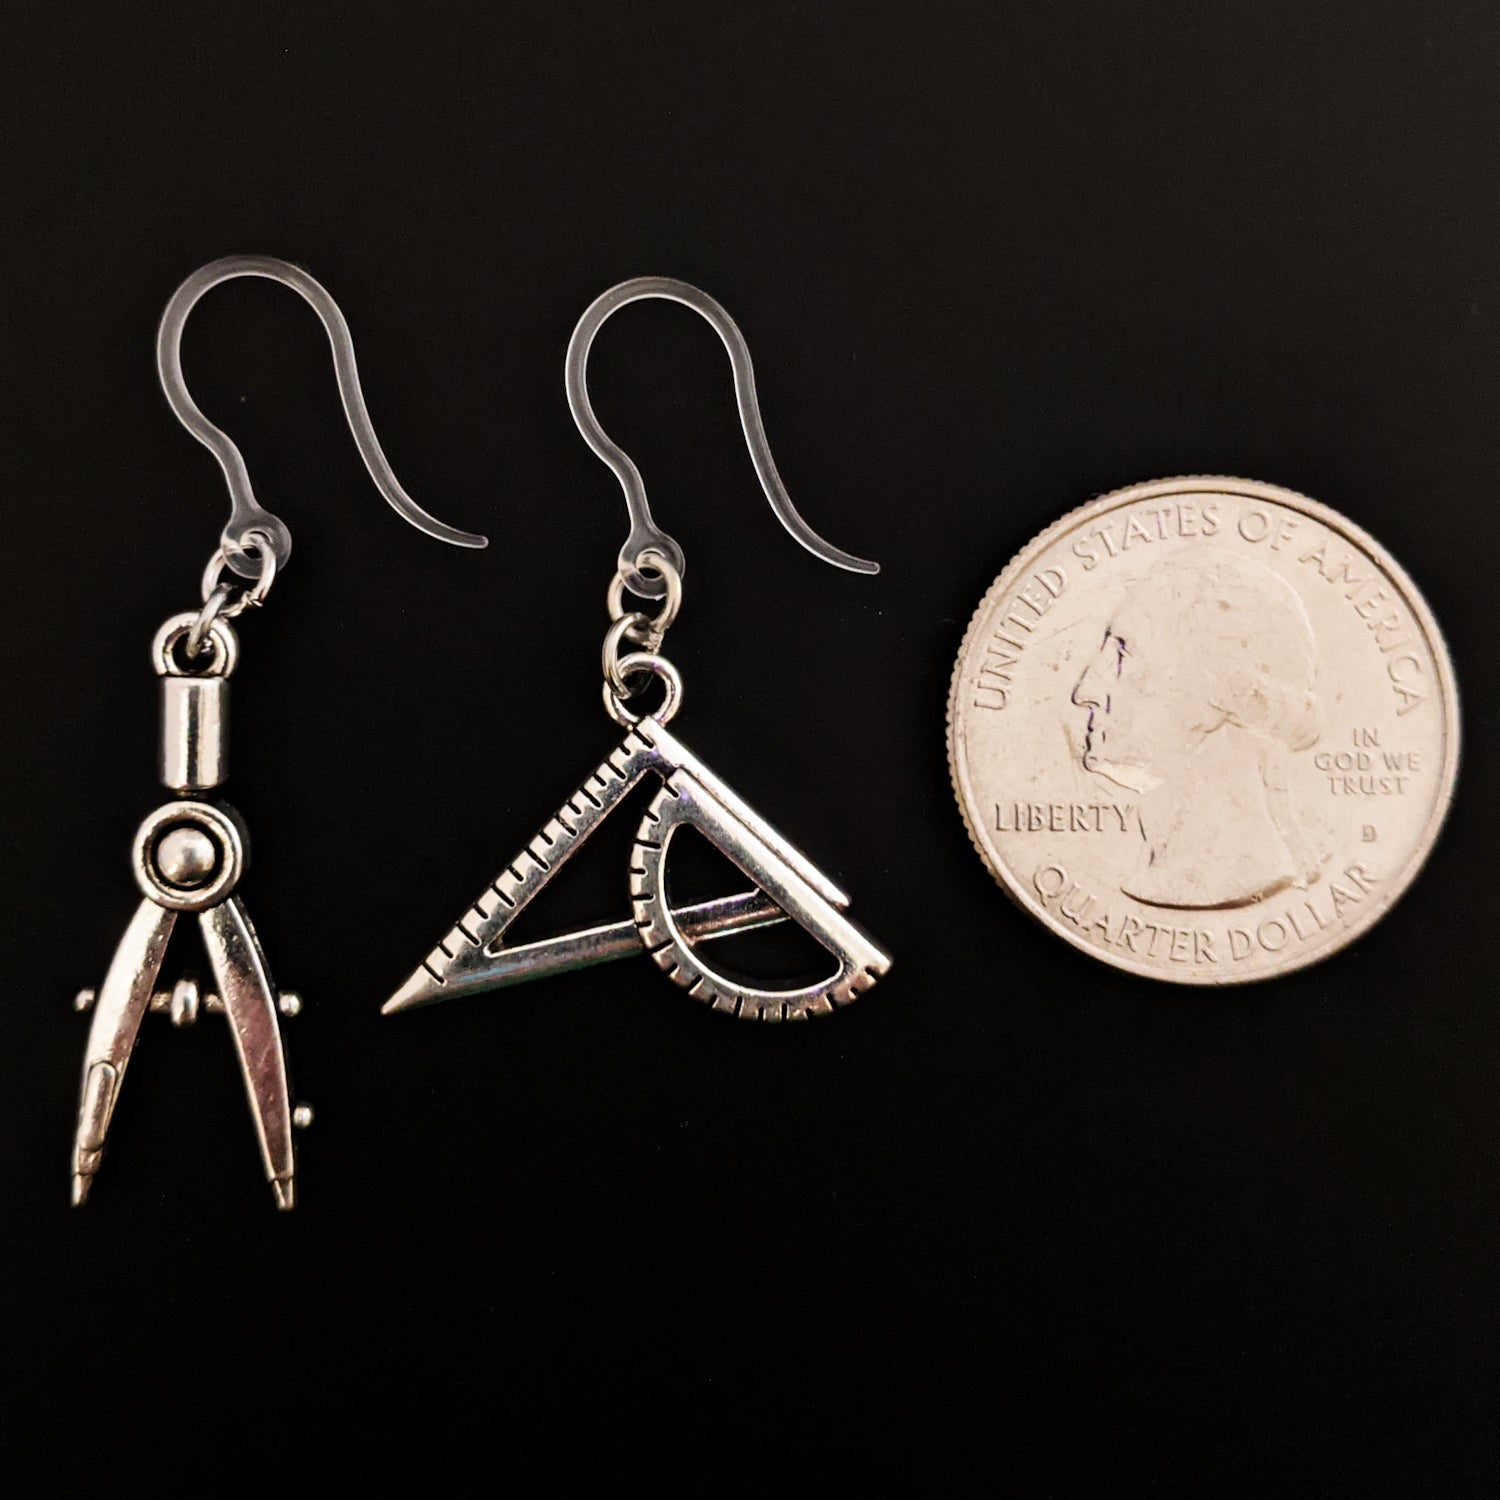 Compass & Protractor Earrings (Dangles) - size comparison quarter